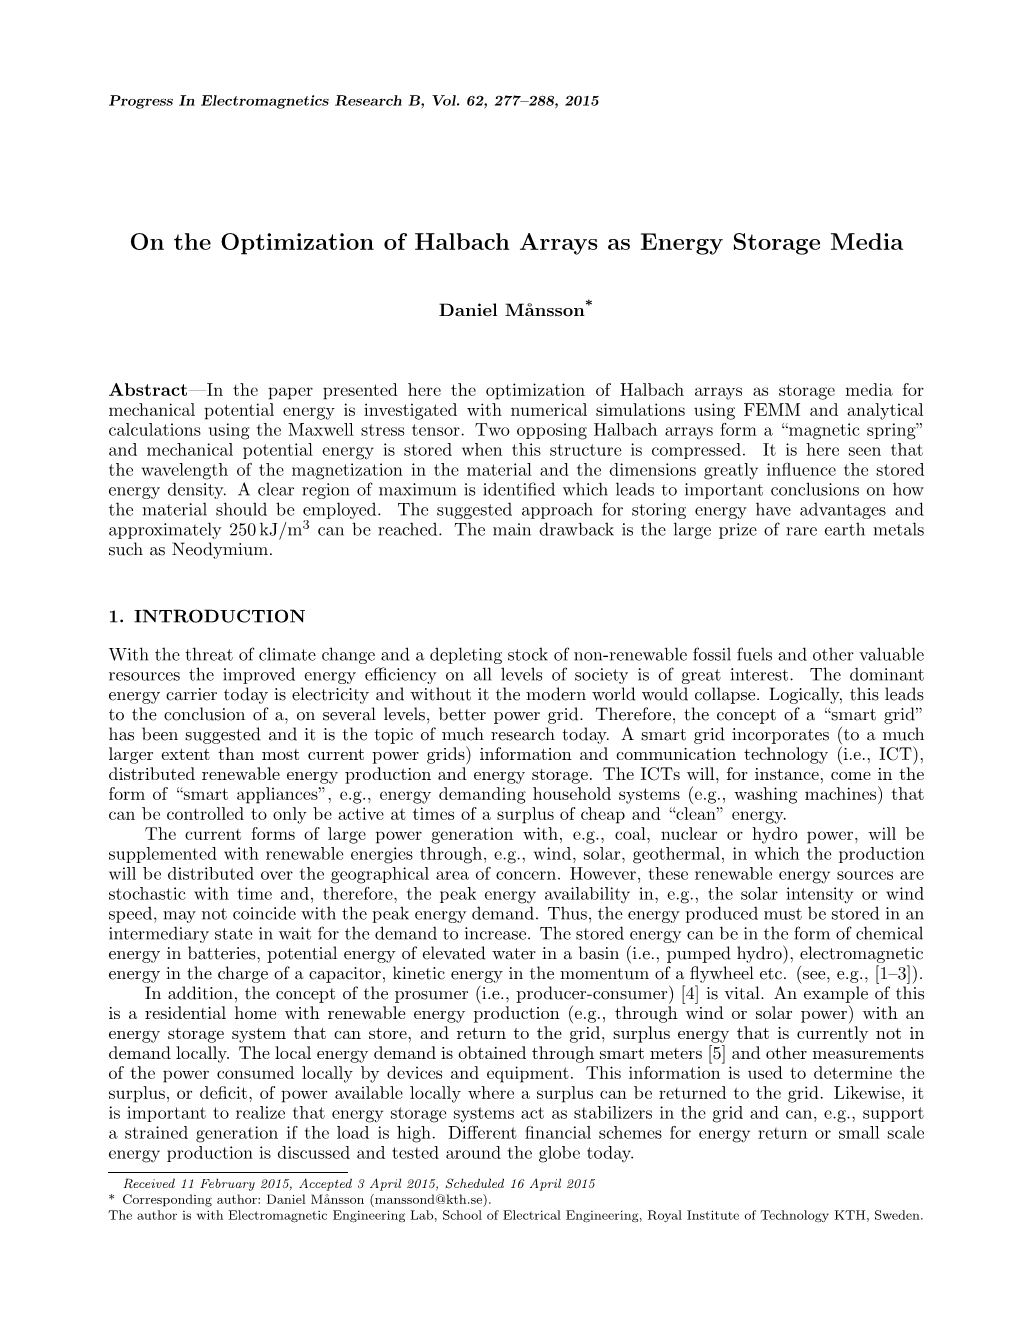 On the Optimization of Halbach Arrays As Energy Storage Media